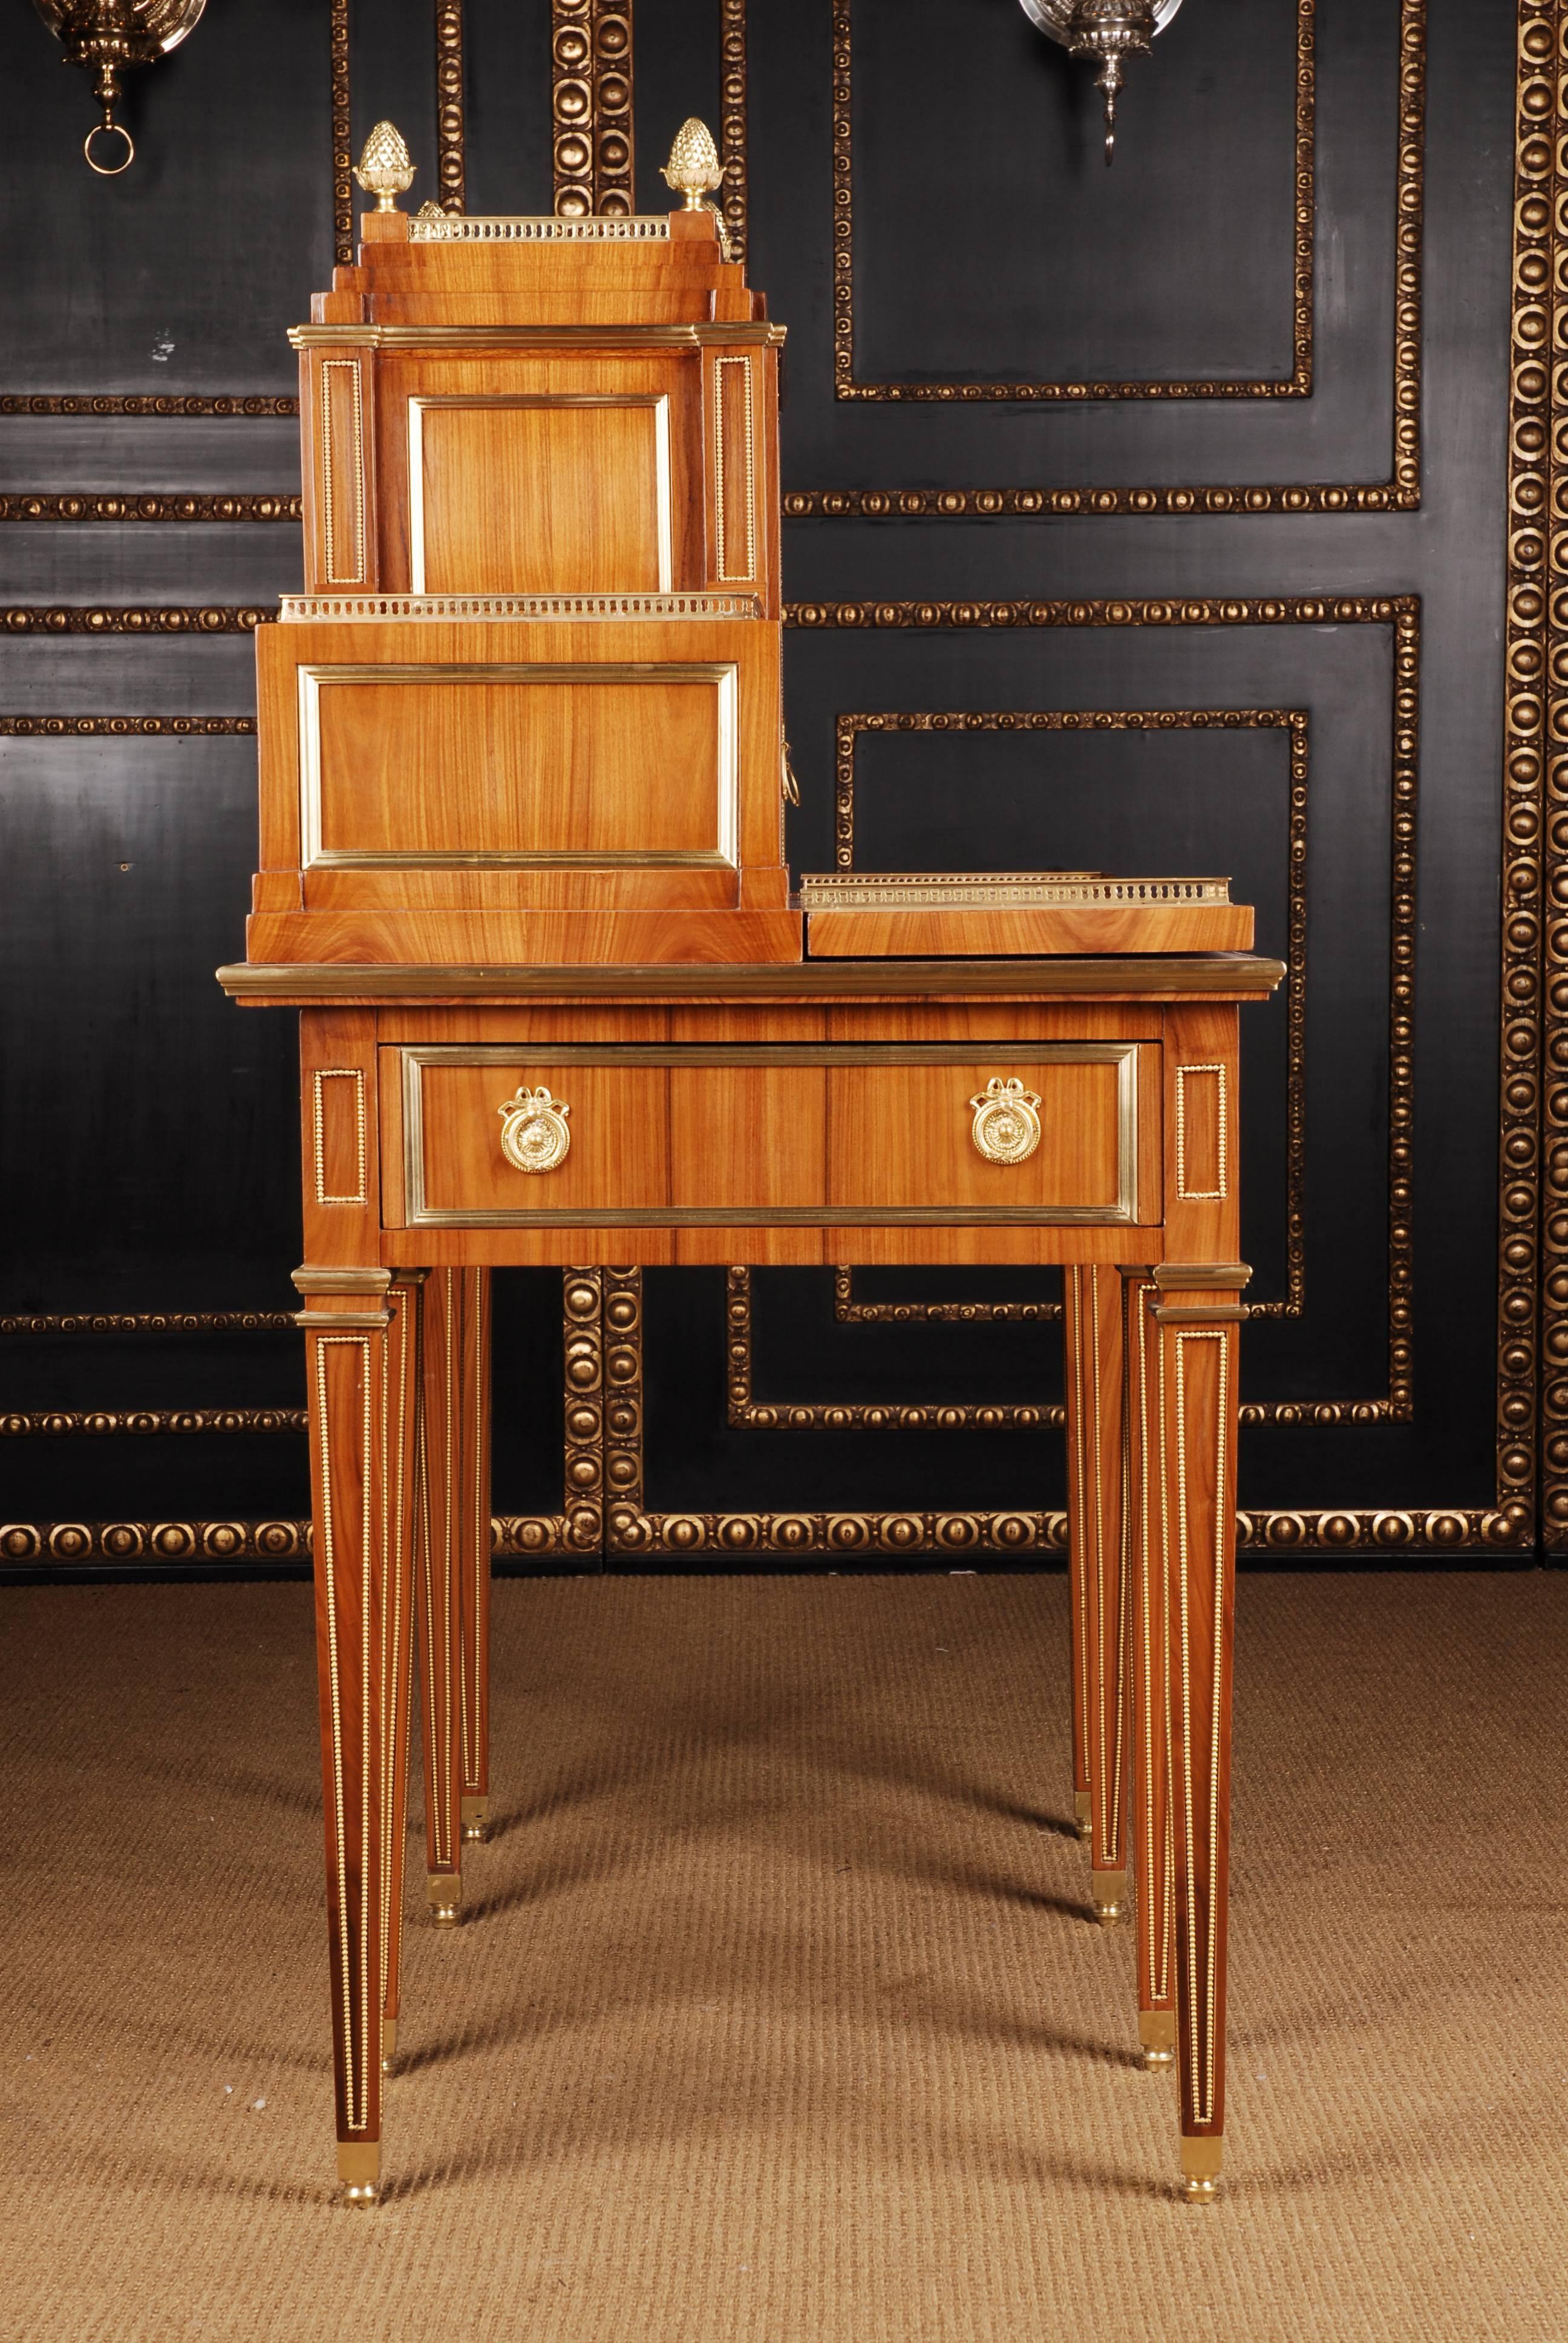 Mahogany Writing Desk or Conversion Table after antique David Roentgen, 1780-1795 